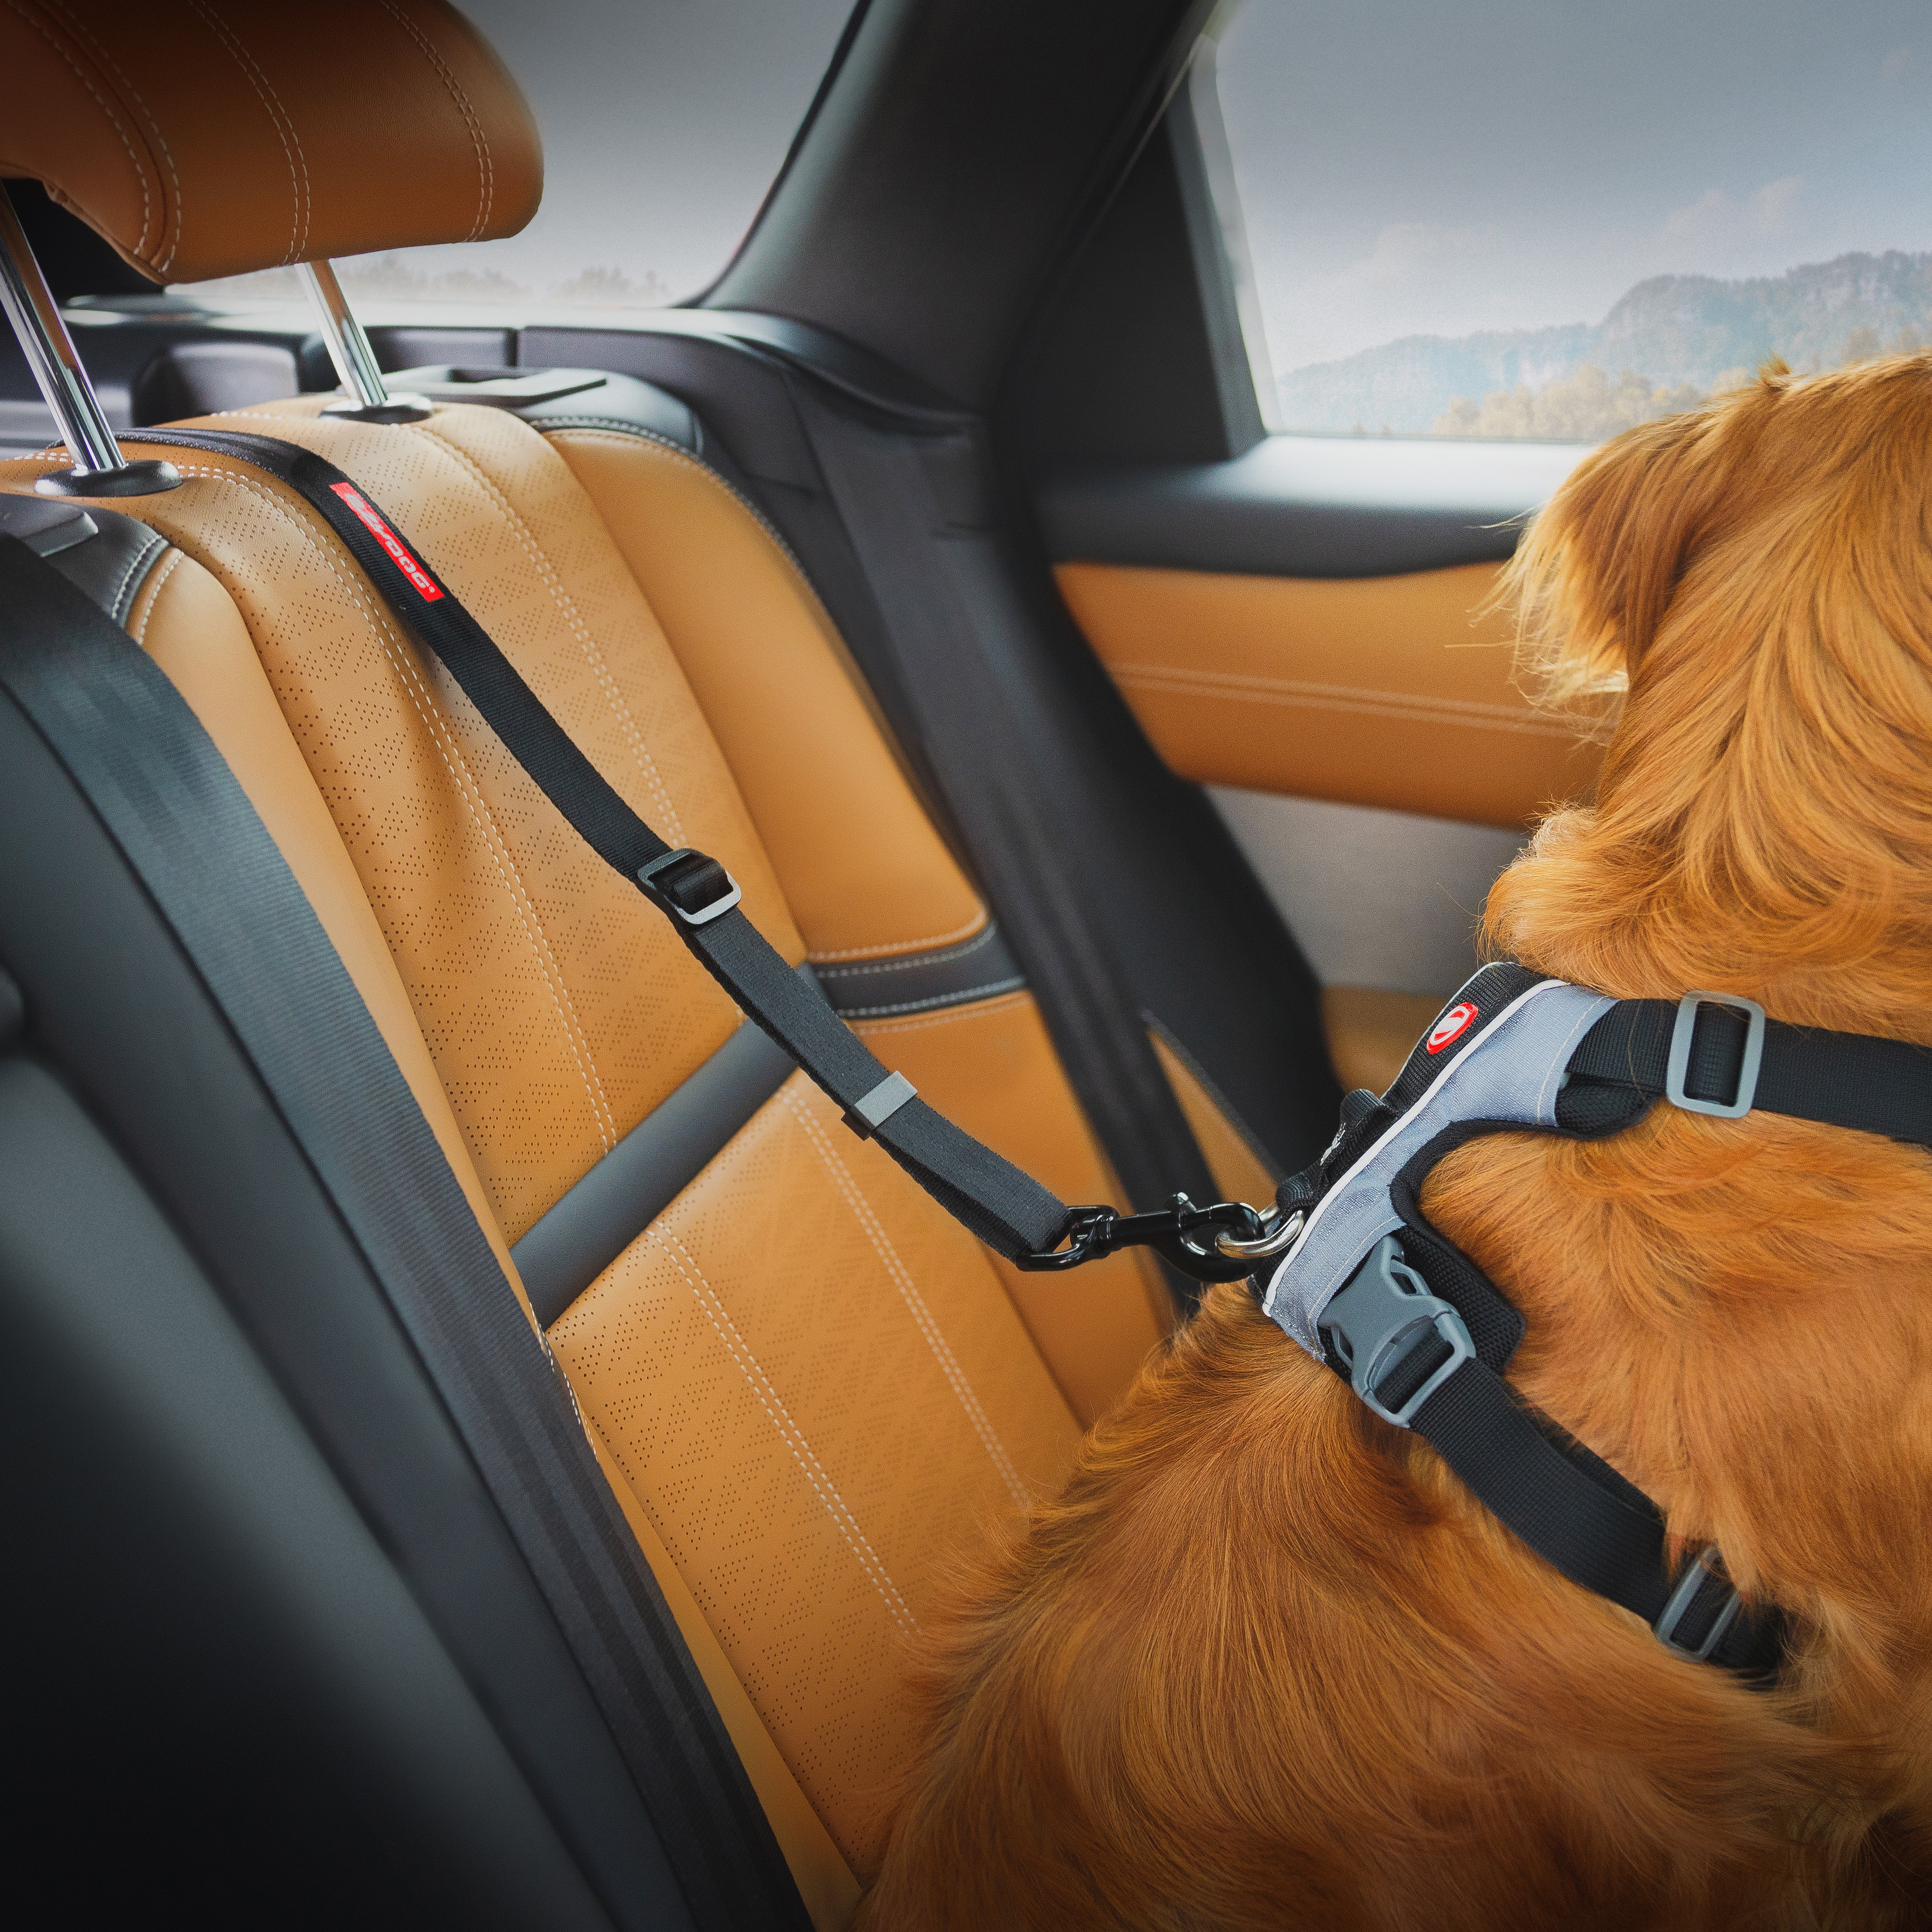 Click Dog Seat Belt - ISOFIX